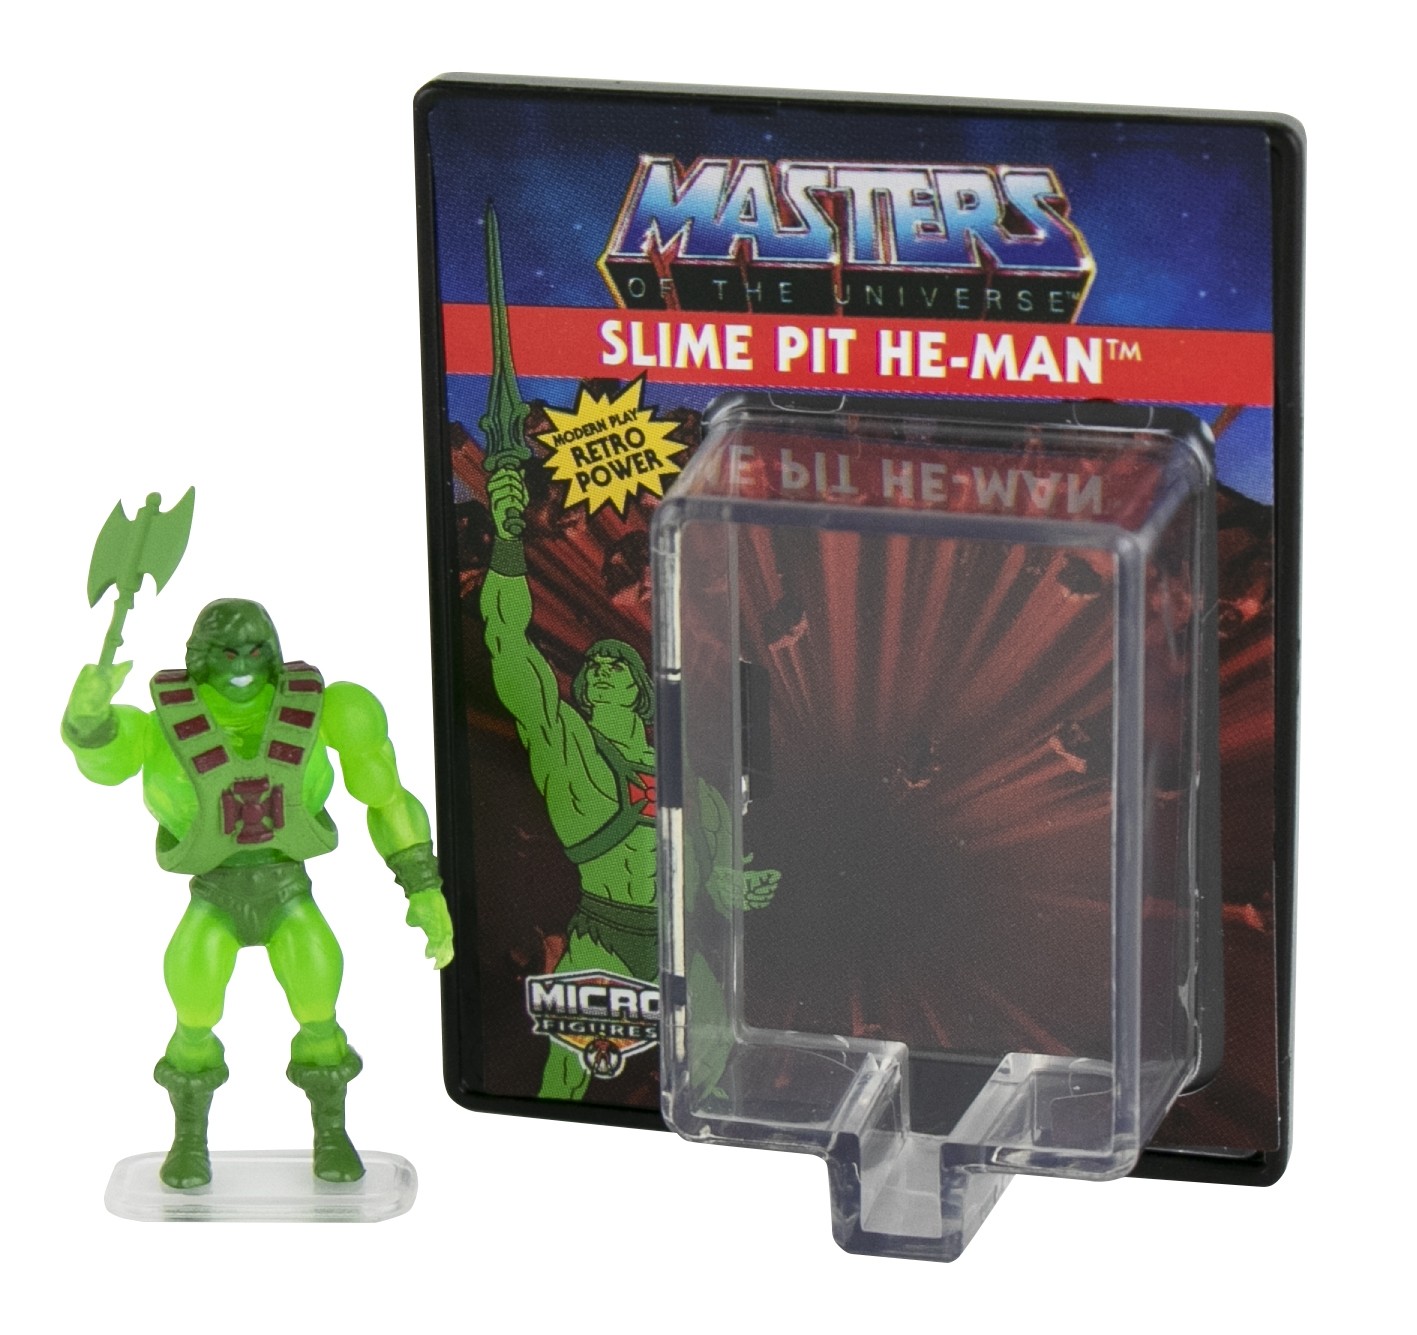 Slime Pit He-Man